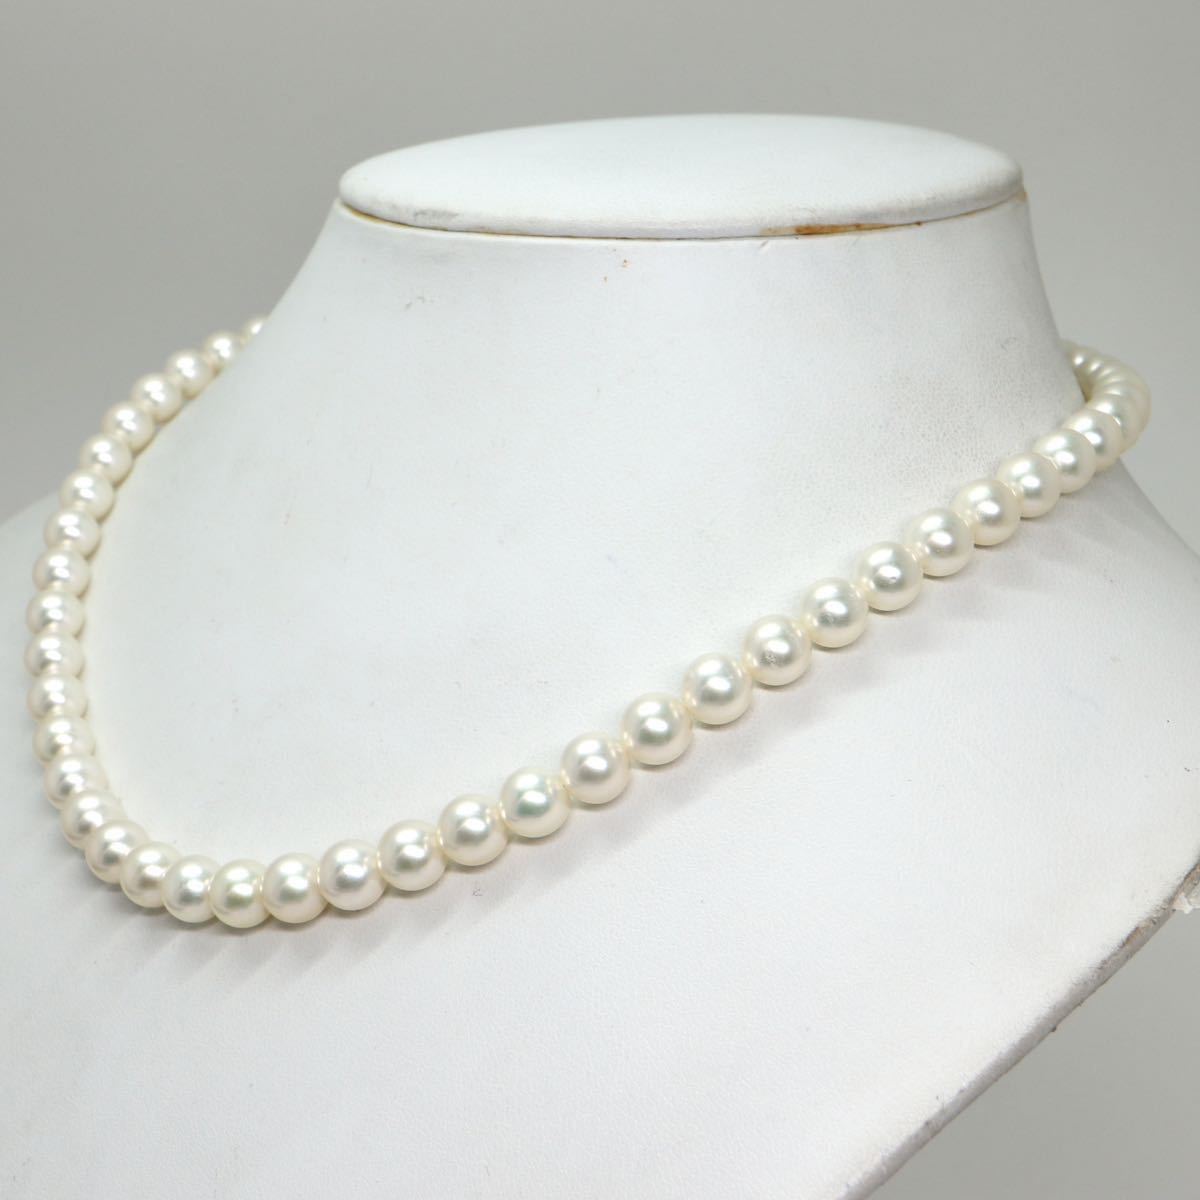 MIKIMOTO(ミキモト)良質!!《アコヤ本真珠ネックレス》D ◎7.0-7.5mm珠 32.7g 43cm pearl necklace jewelry ジュエリー ED5/EE5_画像3